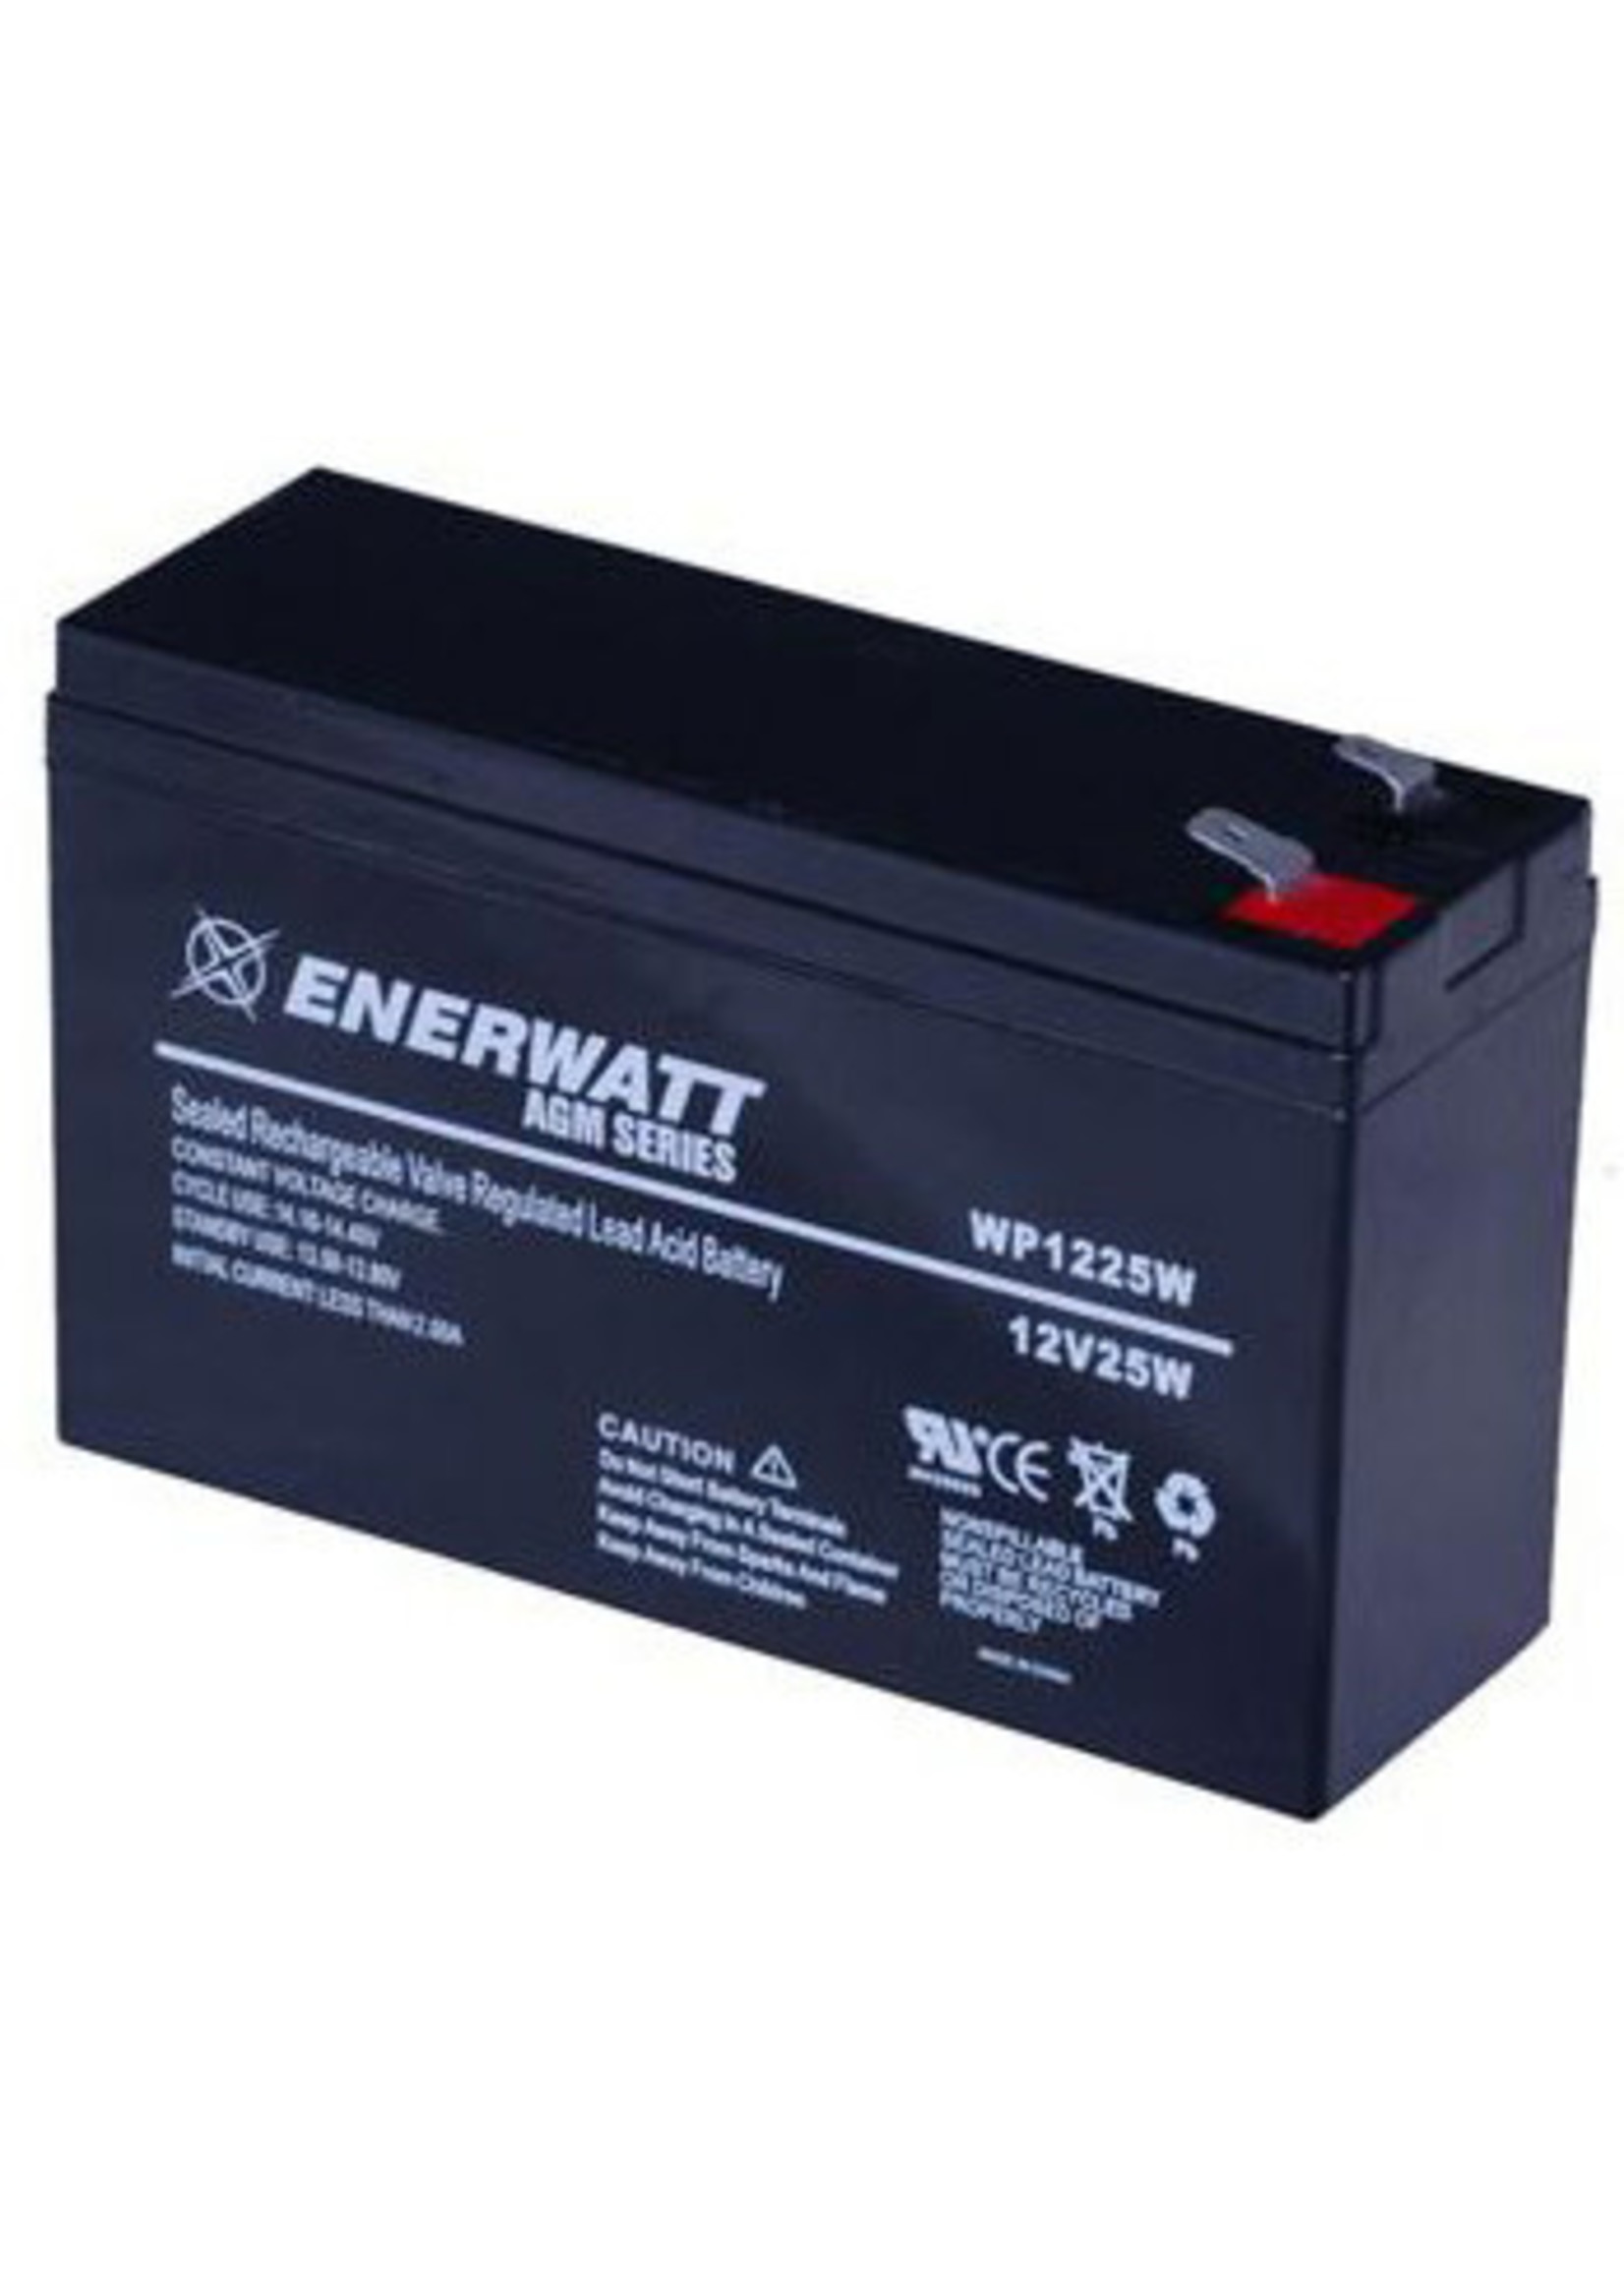 ENERWATT WP1225W BATT AGM 12V 25 WATTS T2T1(UPS)